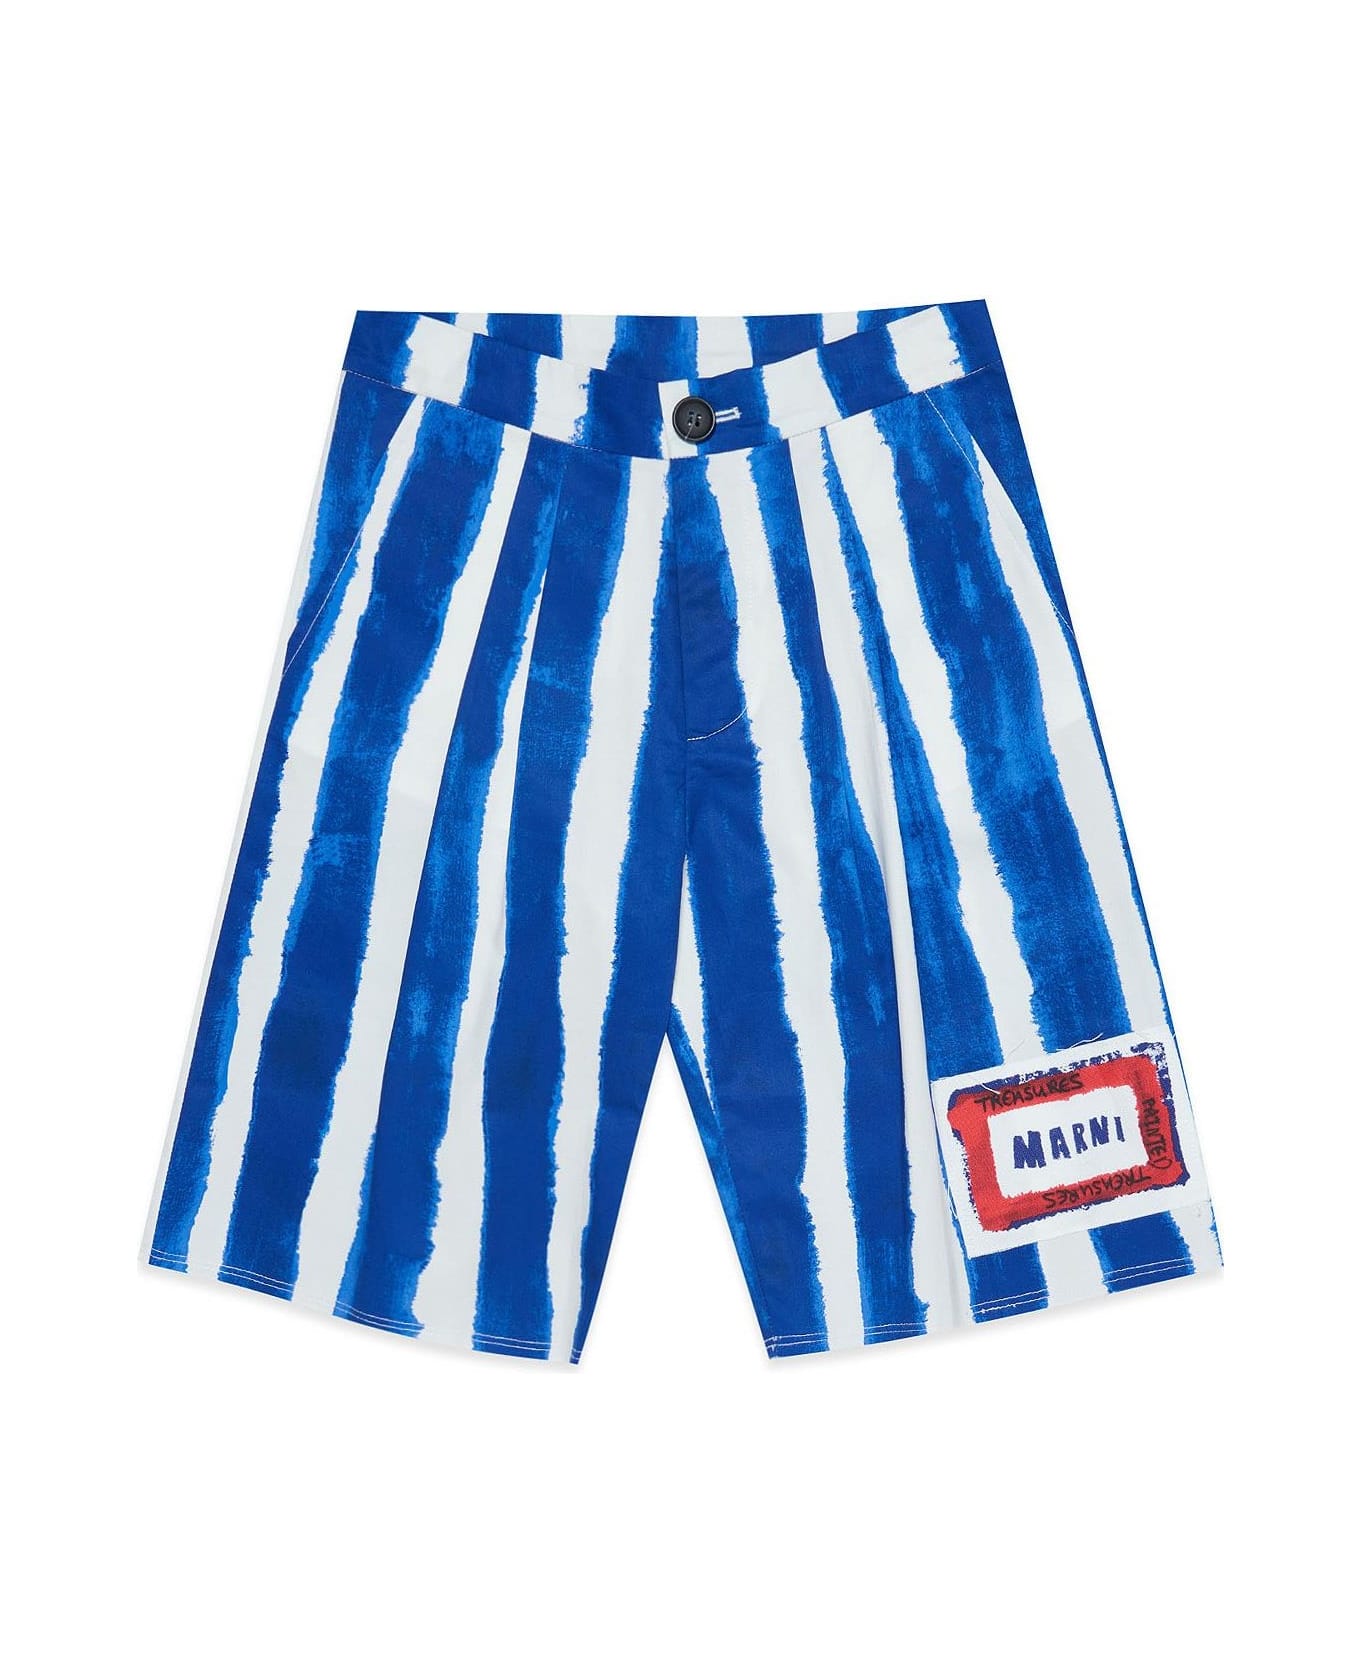 Marni Striped Shorts - Blue